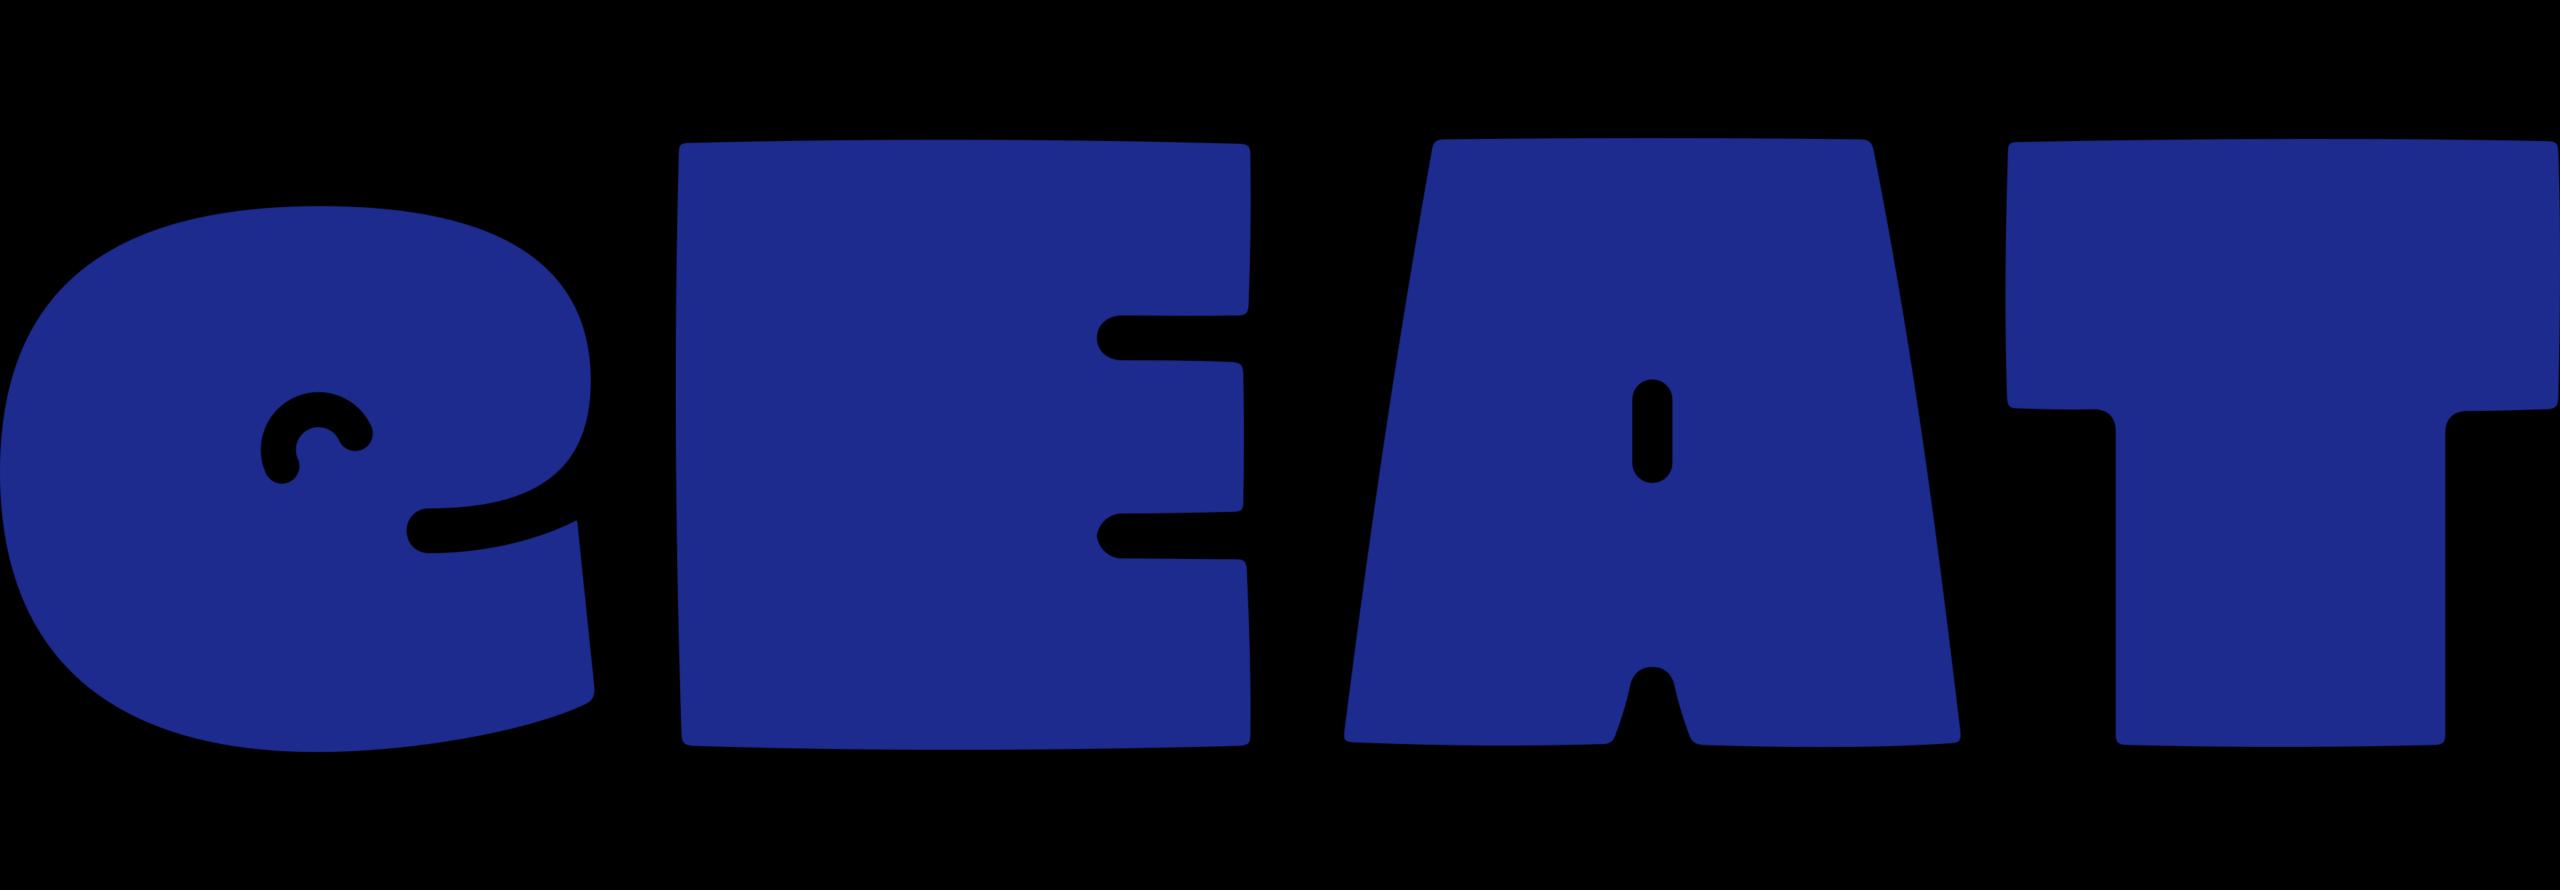 Logo eEAT haccp